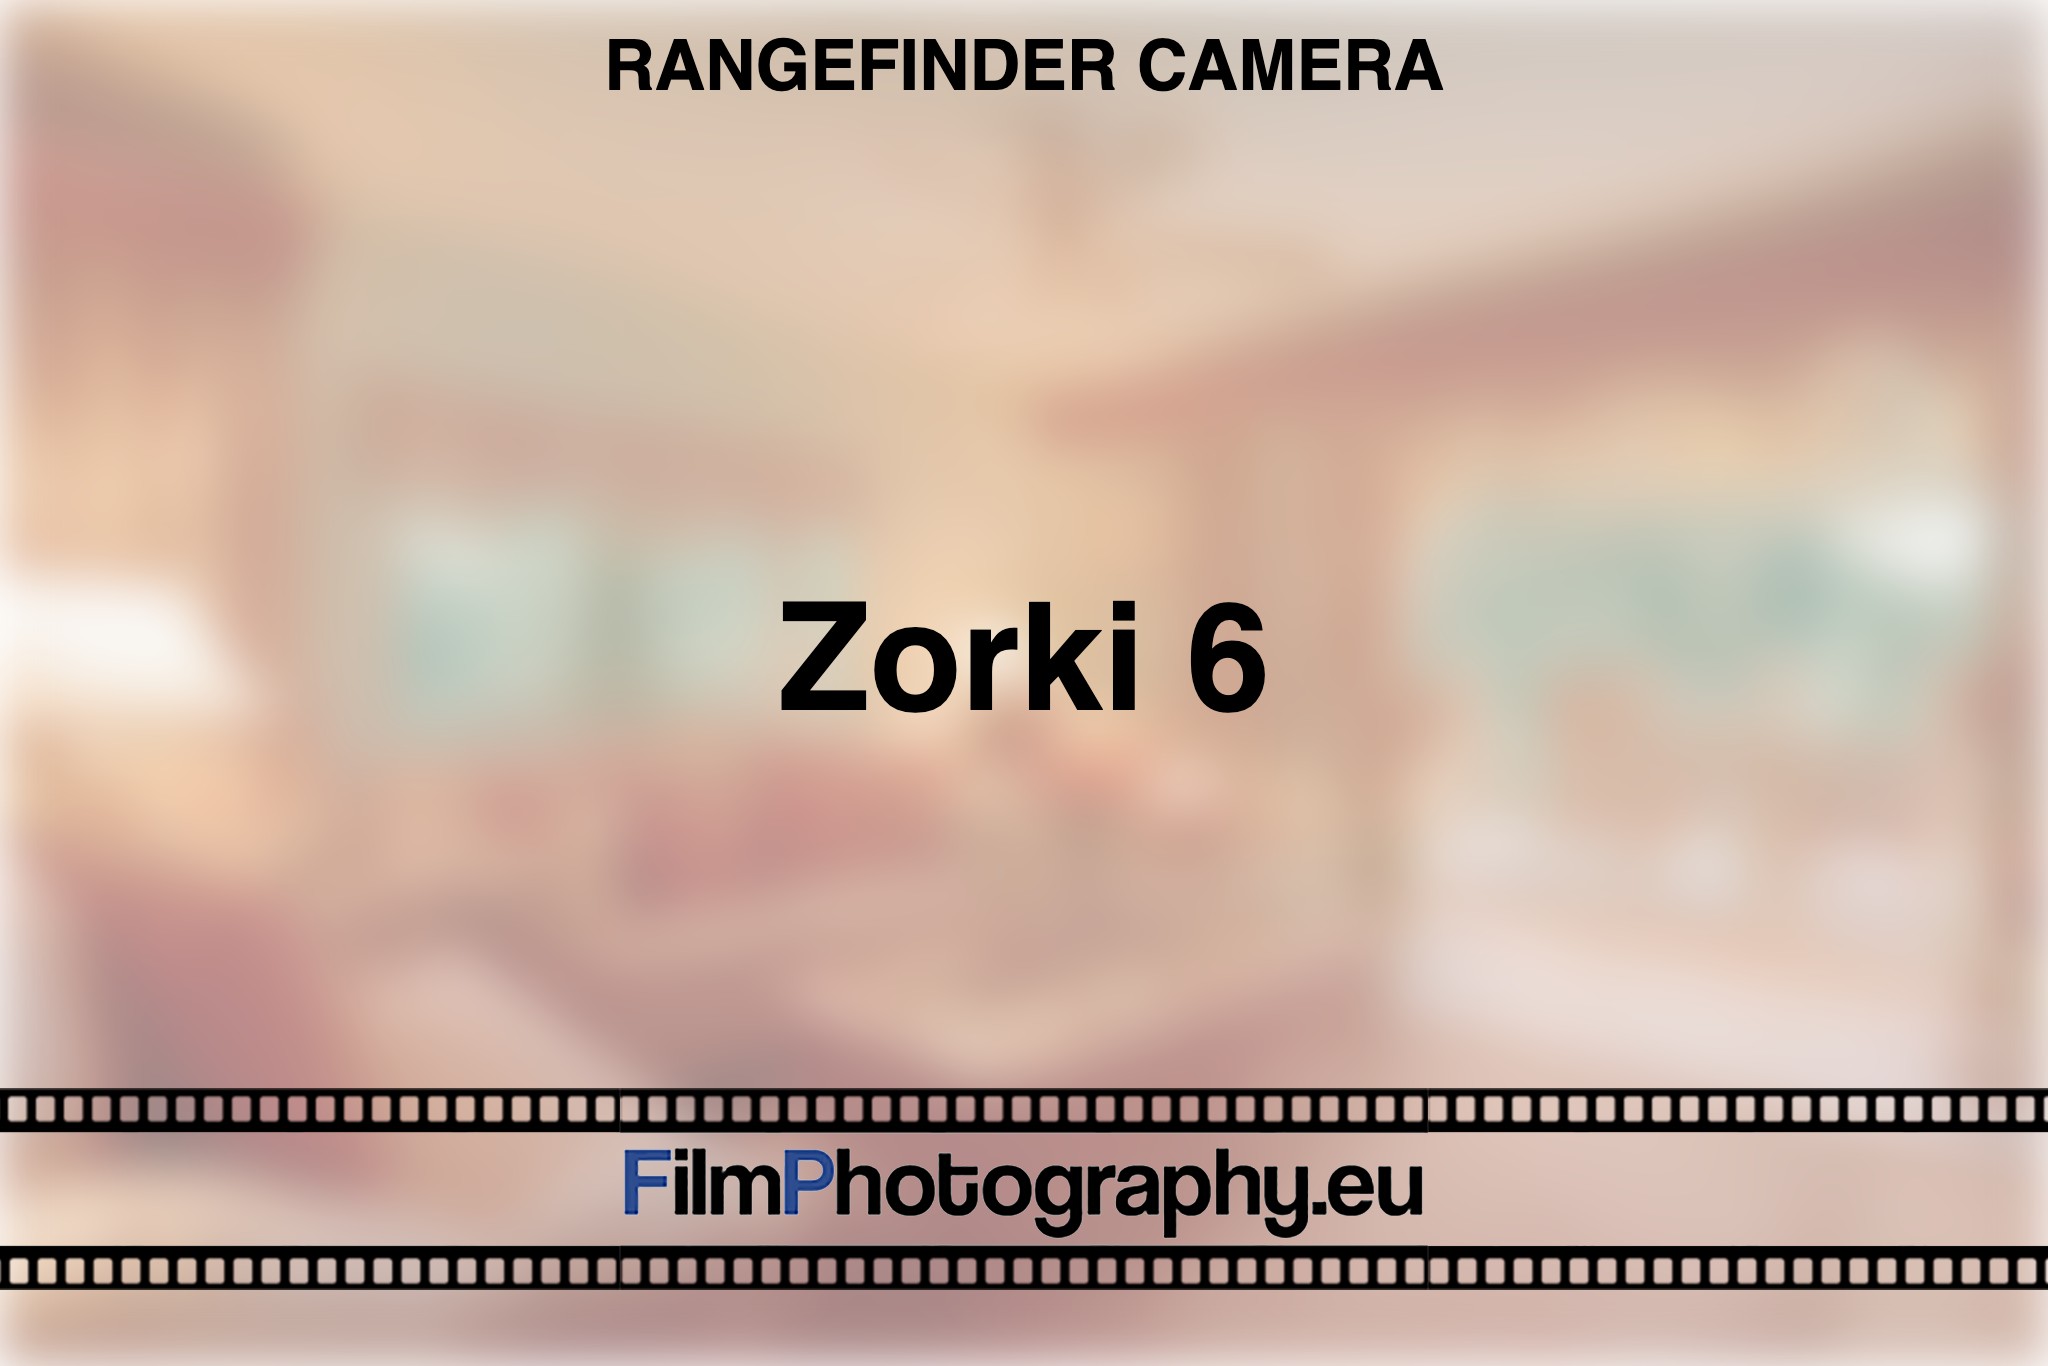 zorki-6-rangefinder-camera-bnv